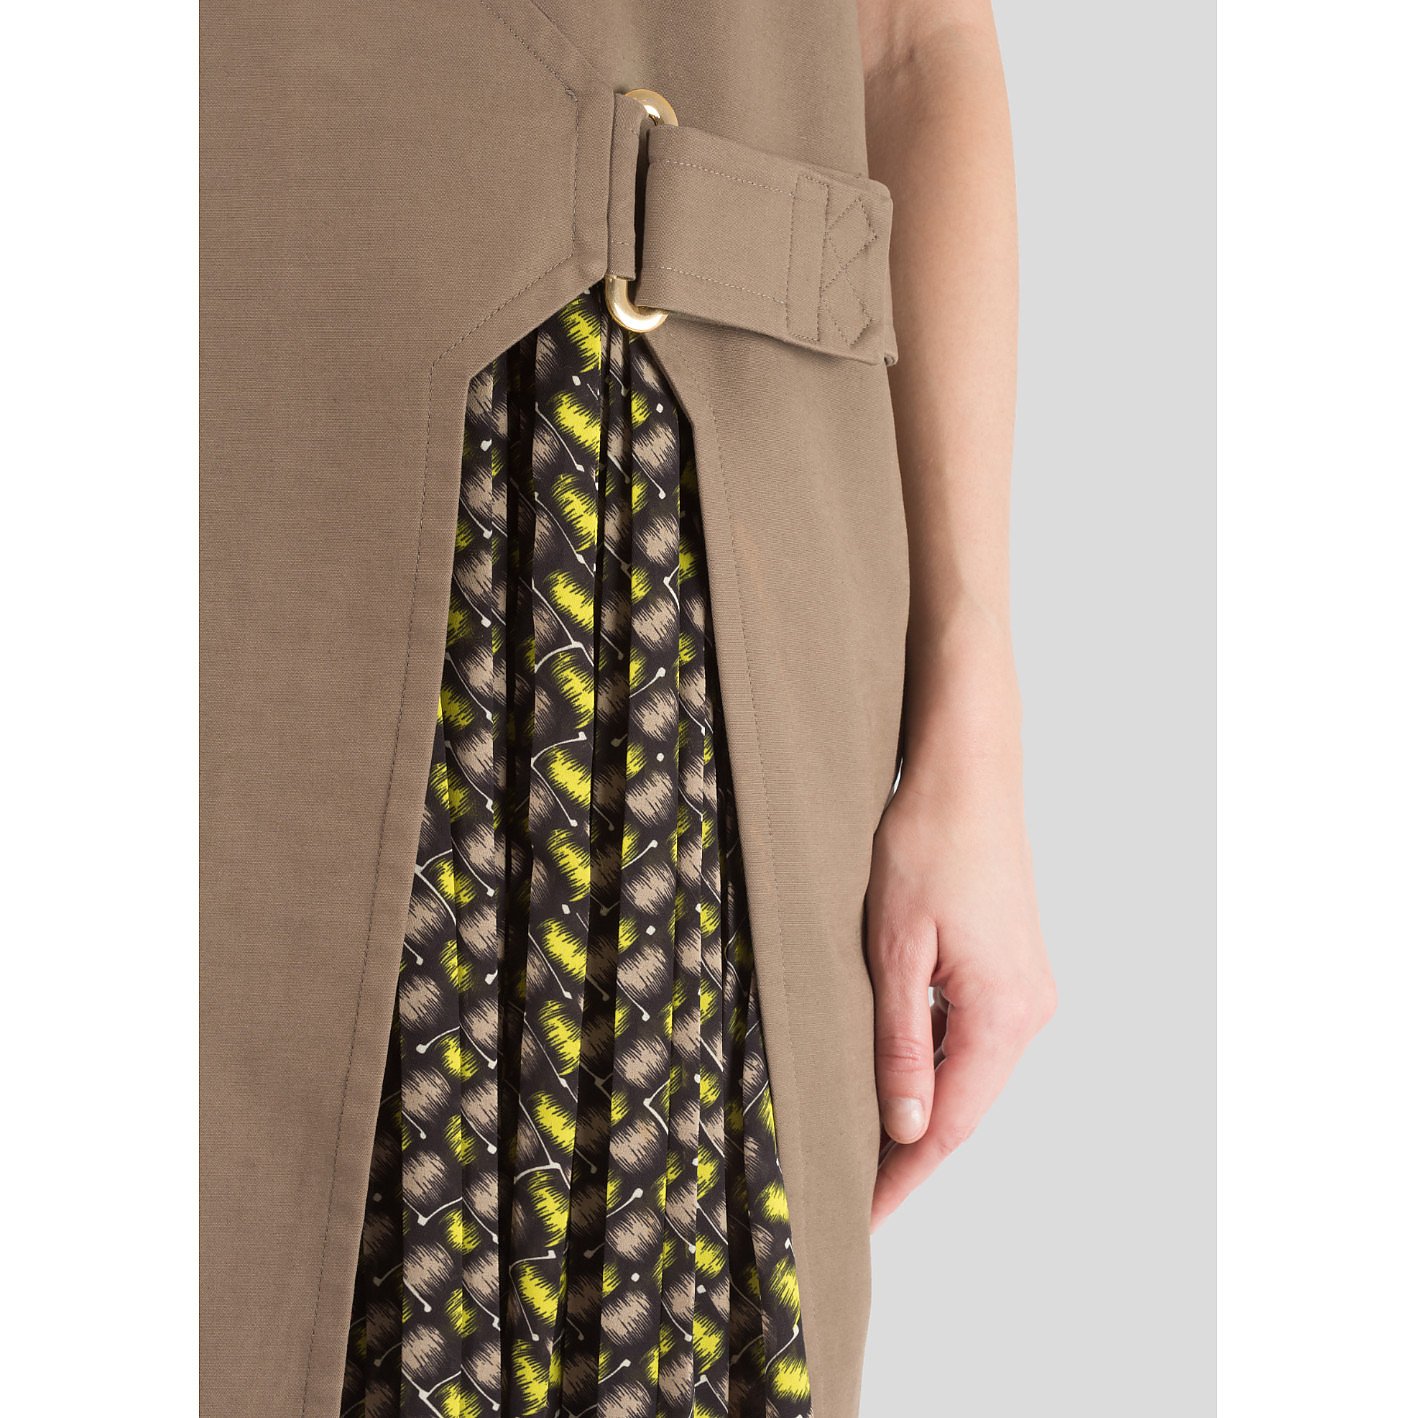 KENZO Sleeveless Dress With Printed Skirt